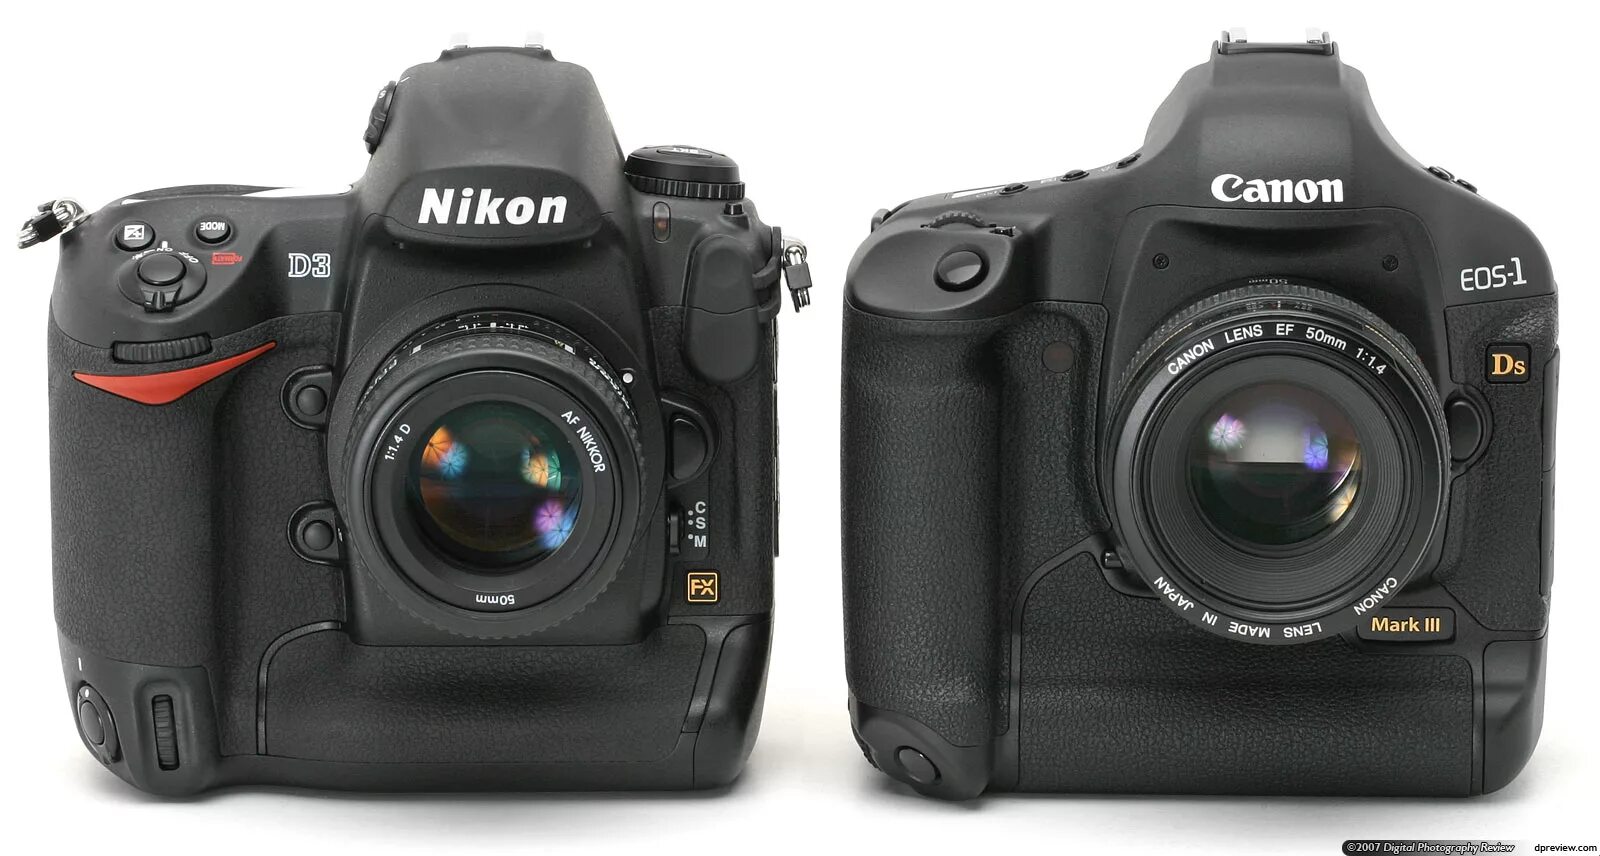 Canon 1ds mark. Canon EOS-1ds Mark III. Canon 1ds Mark 3. Canon 1ds m3. : Canon Mark III ds126321.